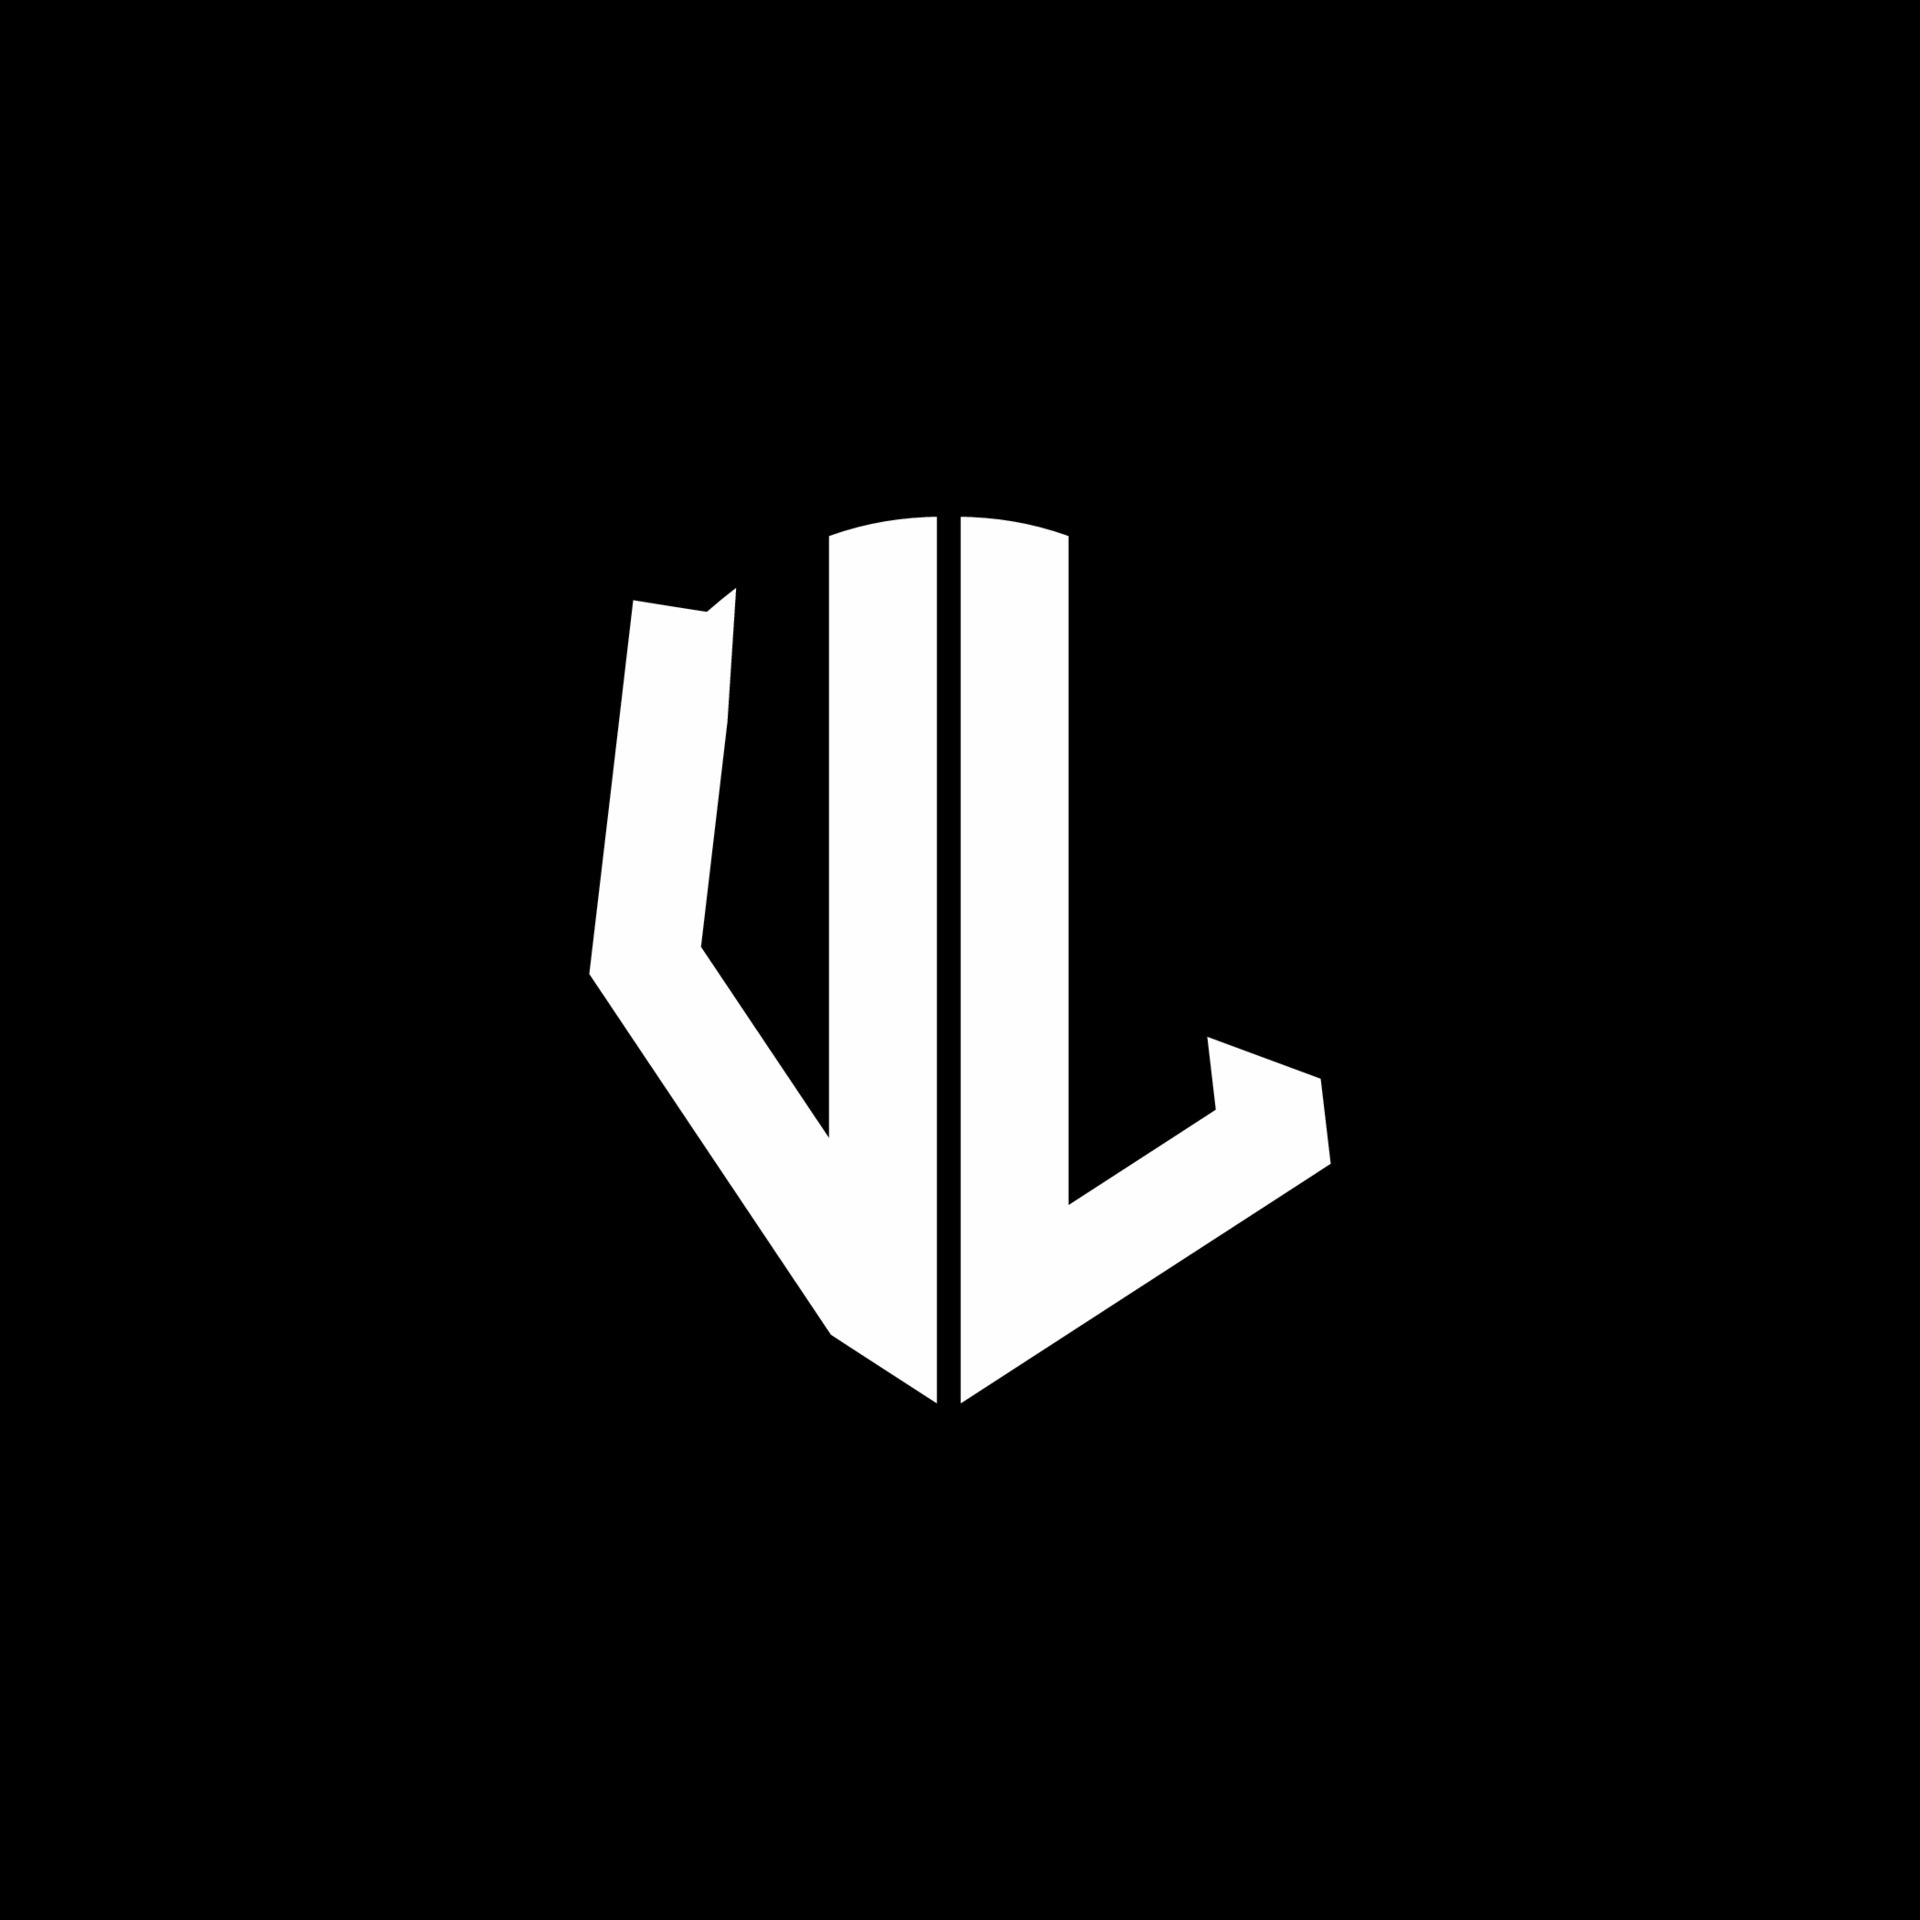 Black VL Logo - LogoDix